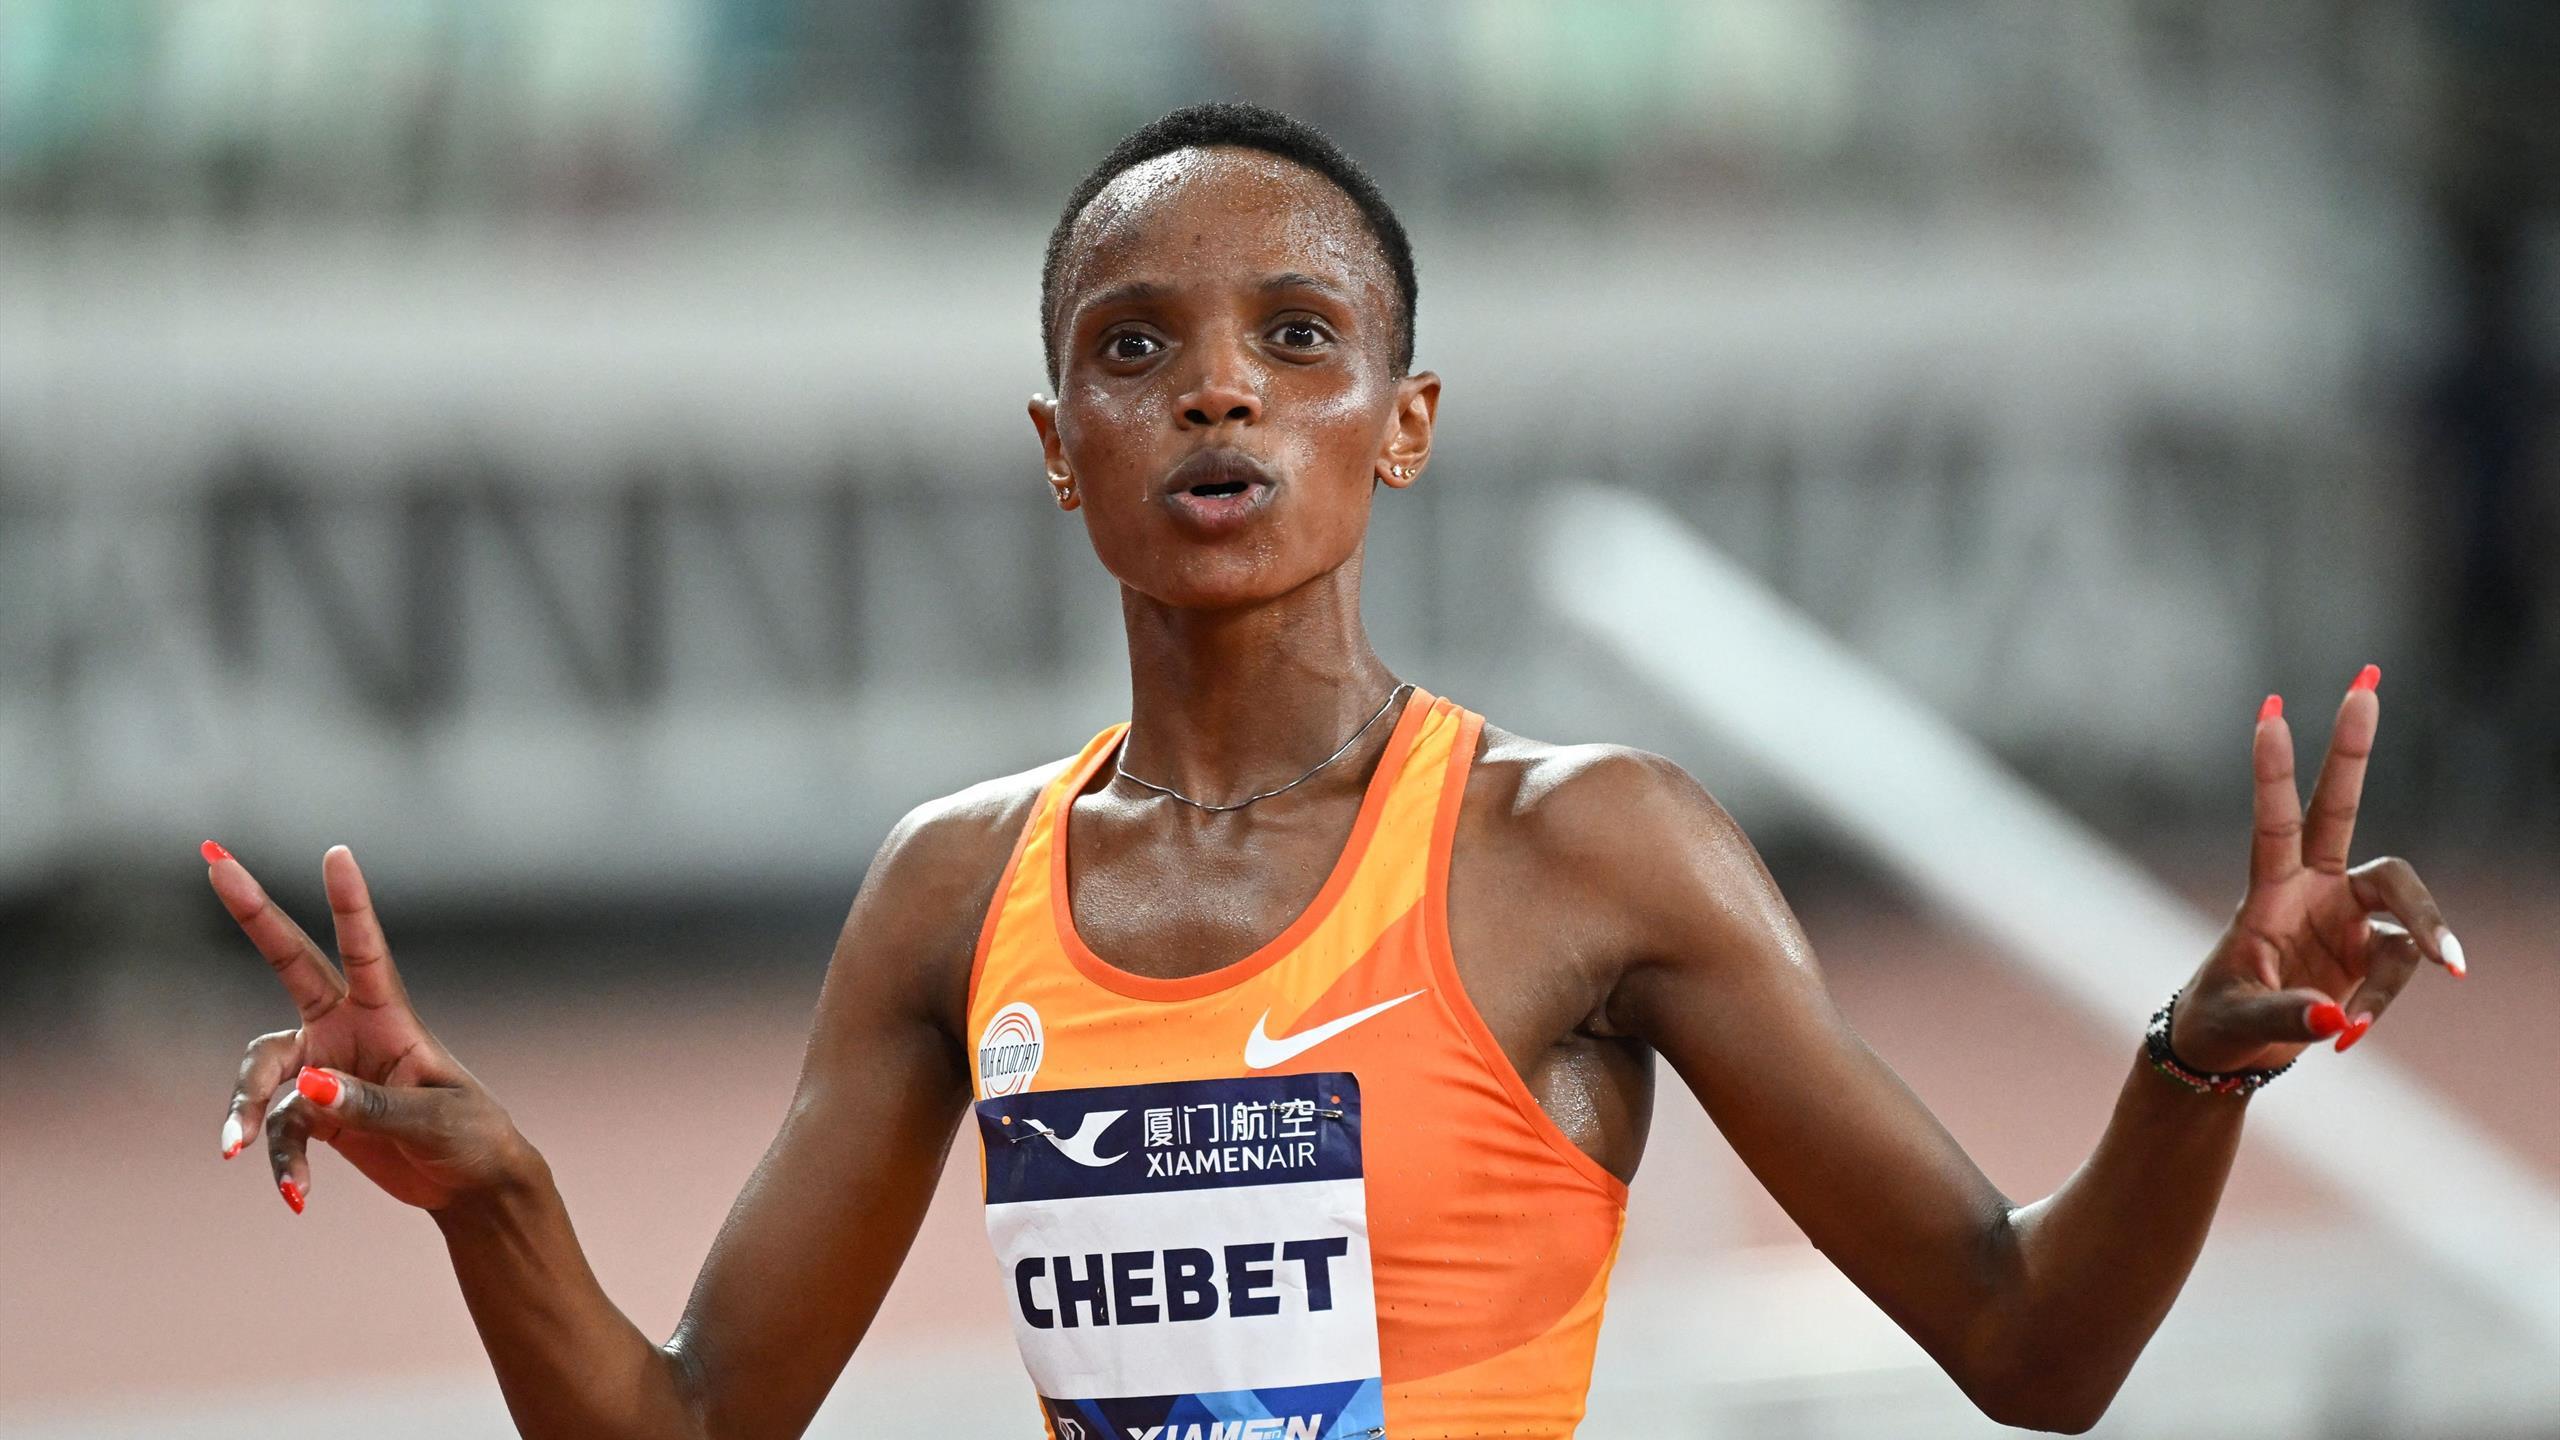 Beatrice Chebet of Kenya breaks women's world 5km record in Barcelona set by Ethiopia's Senbere Teferi - Eurosport